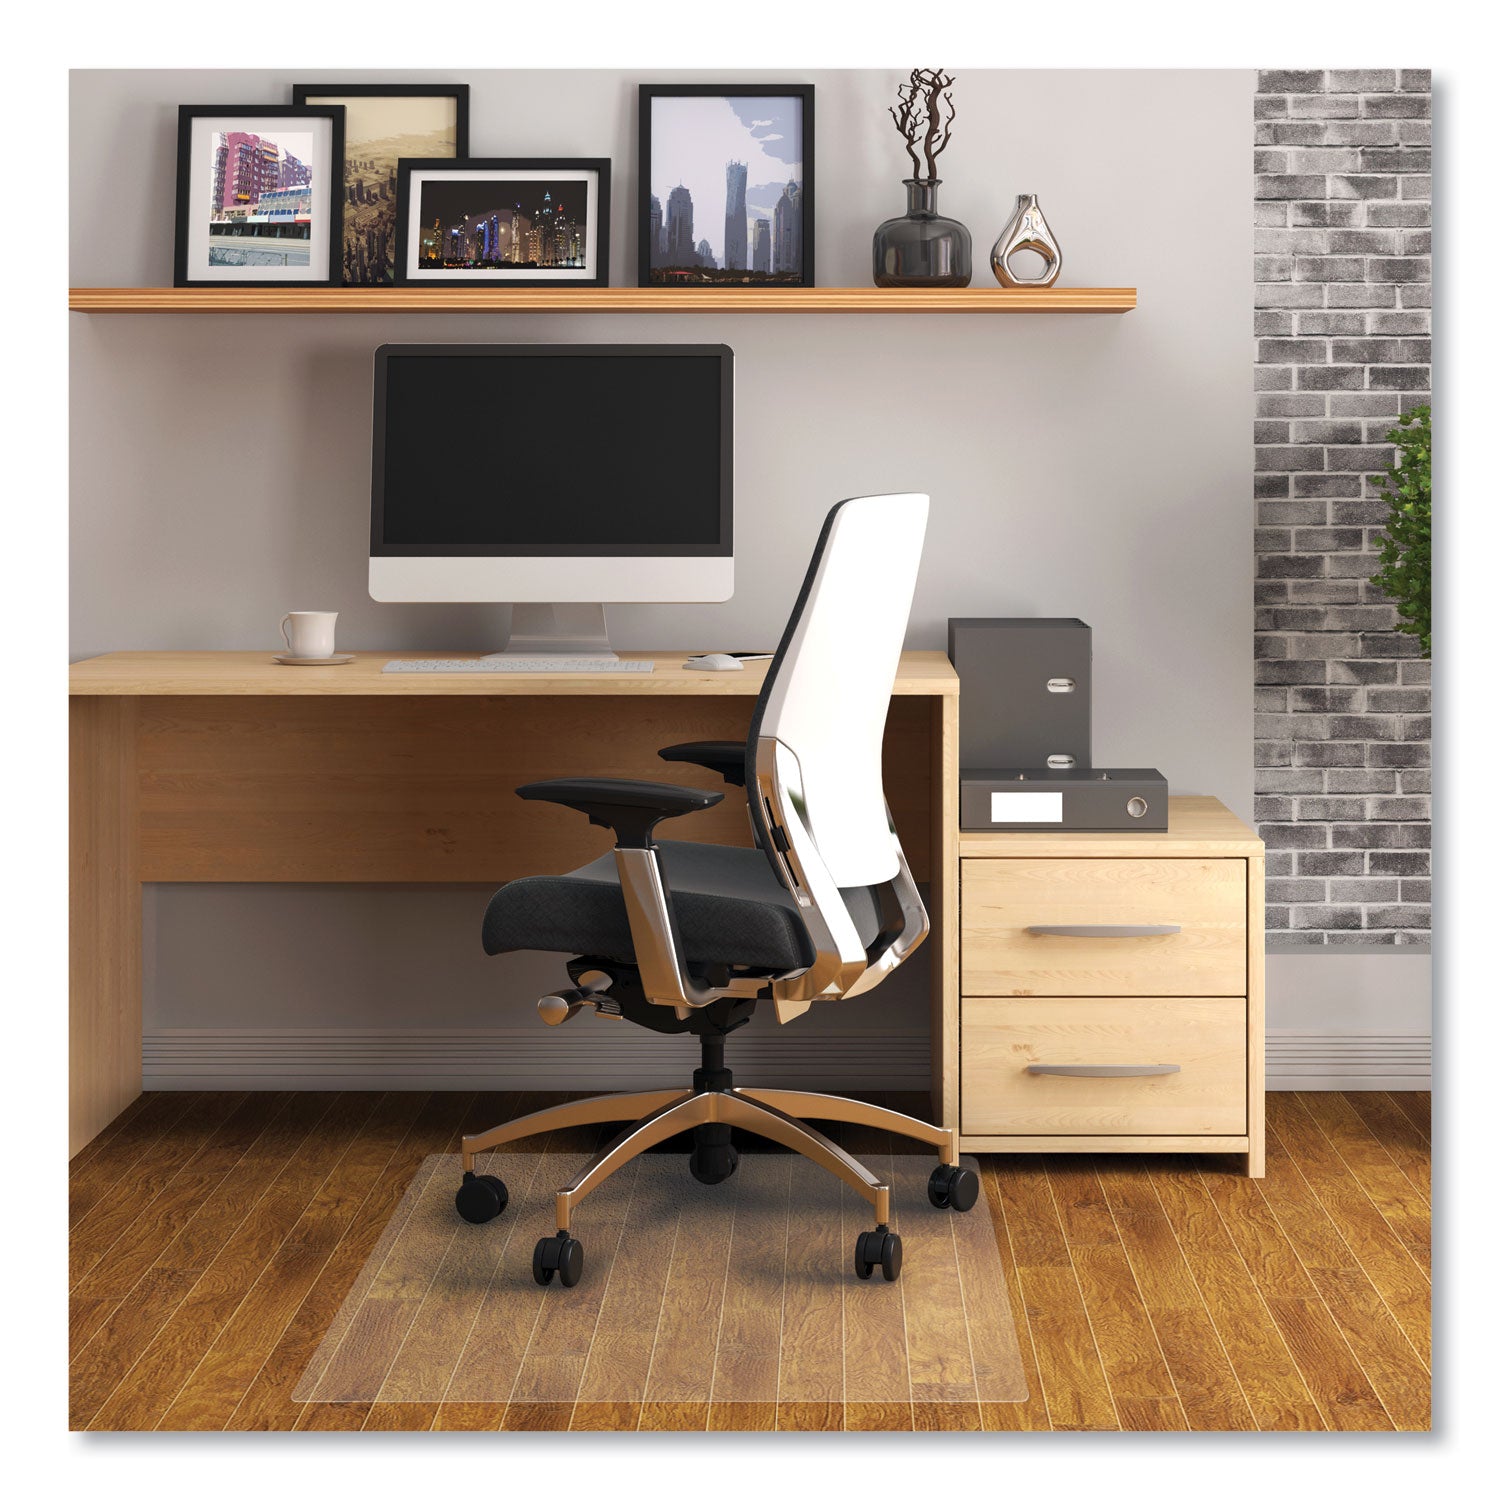 Cleartex Advantagemat Phthalate Free PVC Chair Mat for Hard Floors, 48 x 36, Clear - 